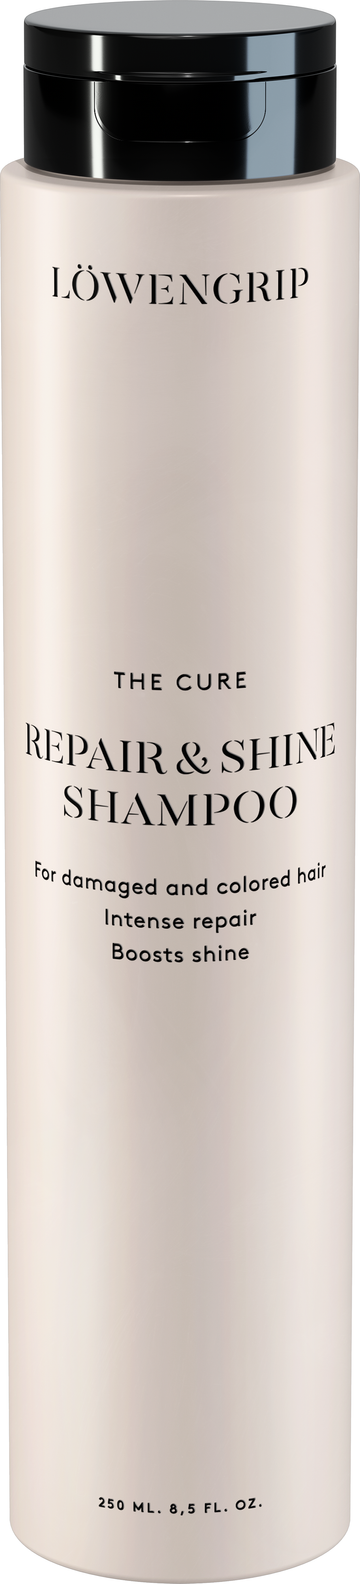 Löwengrip The Cure Repair & Shine shampoo